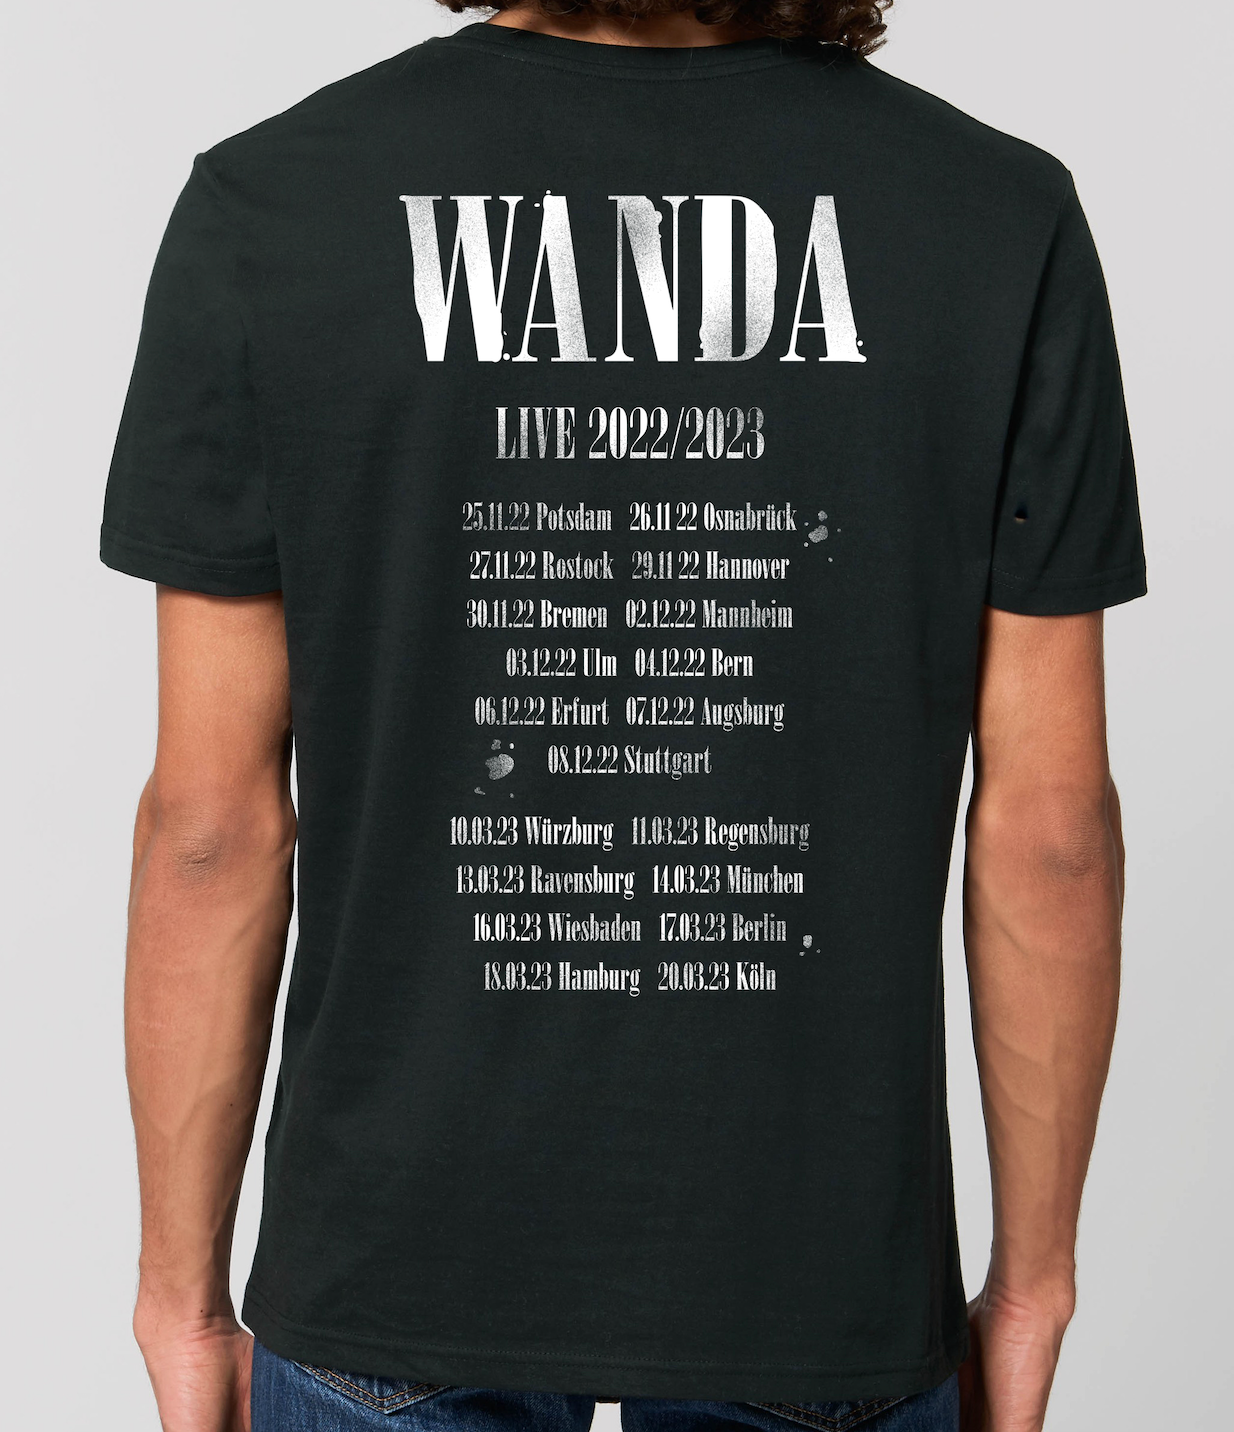 WANDA Tour-Bundle "Grande" (unisex) + LP und Autogrammkarte